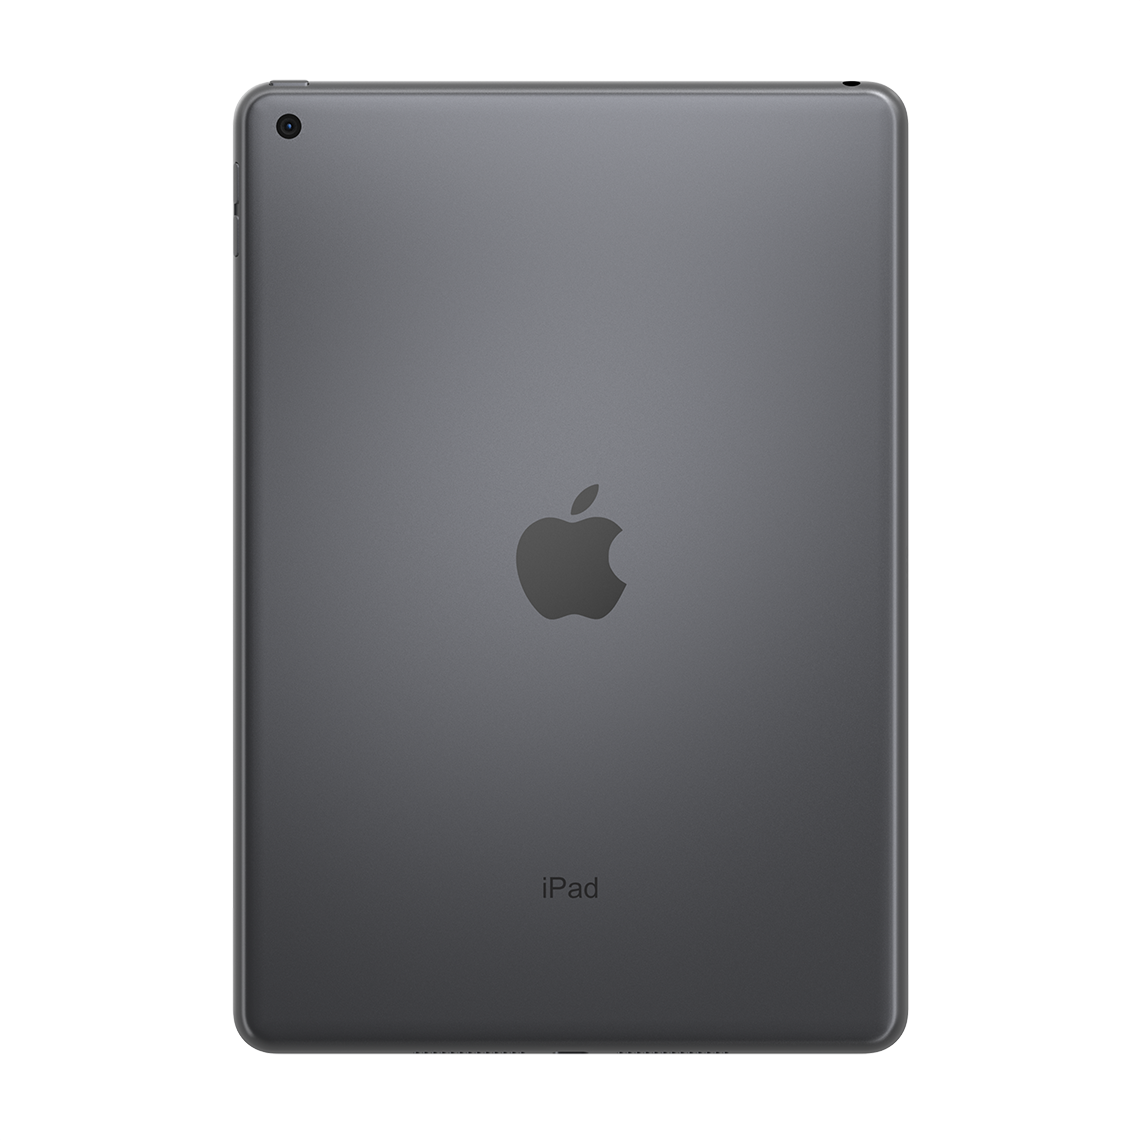 Apple iPad 10.2-inch 9th Generation - Space Gray - 256GB, Wi-Fi, Open Box